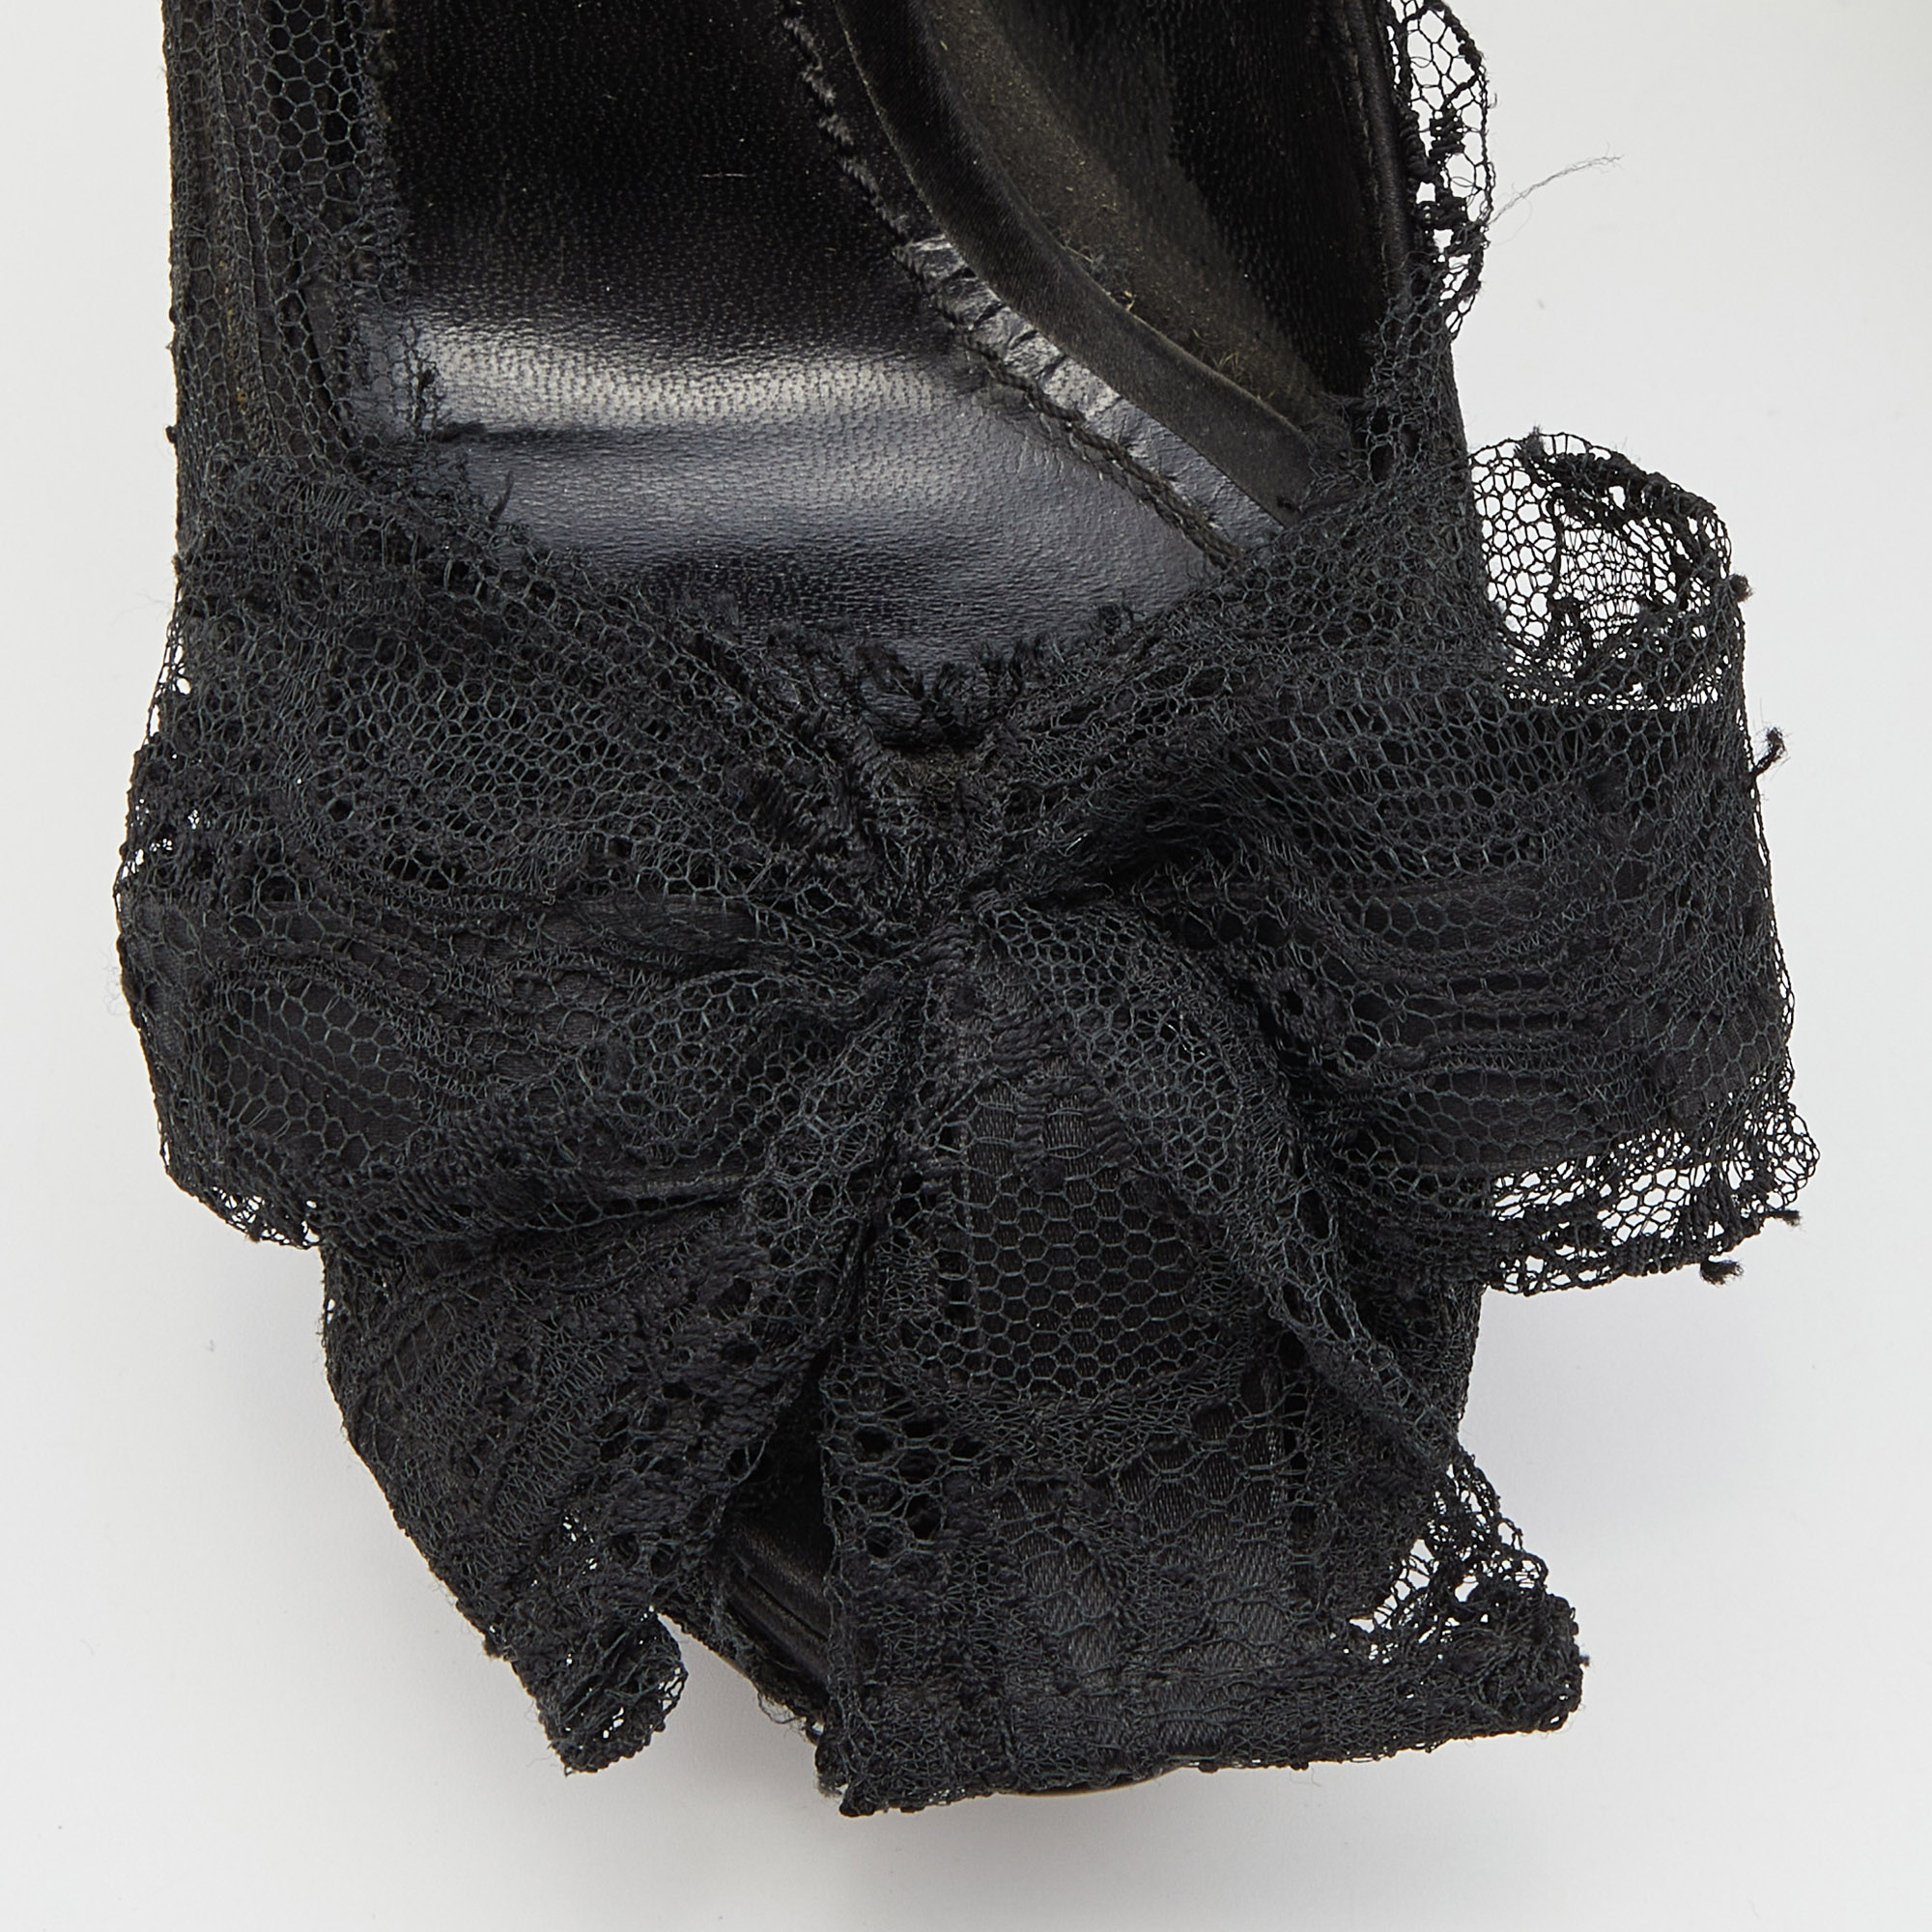 Dolce & Gabbana Black Lace Bow Peep Toe Platform Pumps Size 36